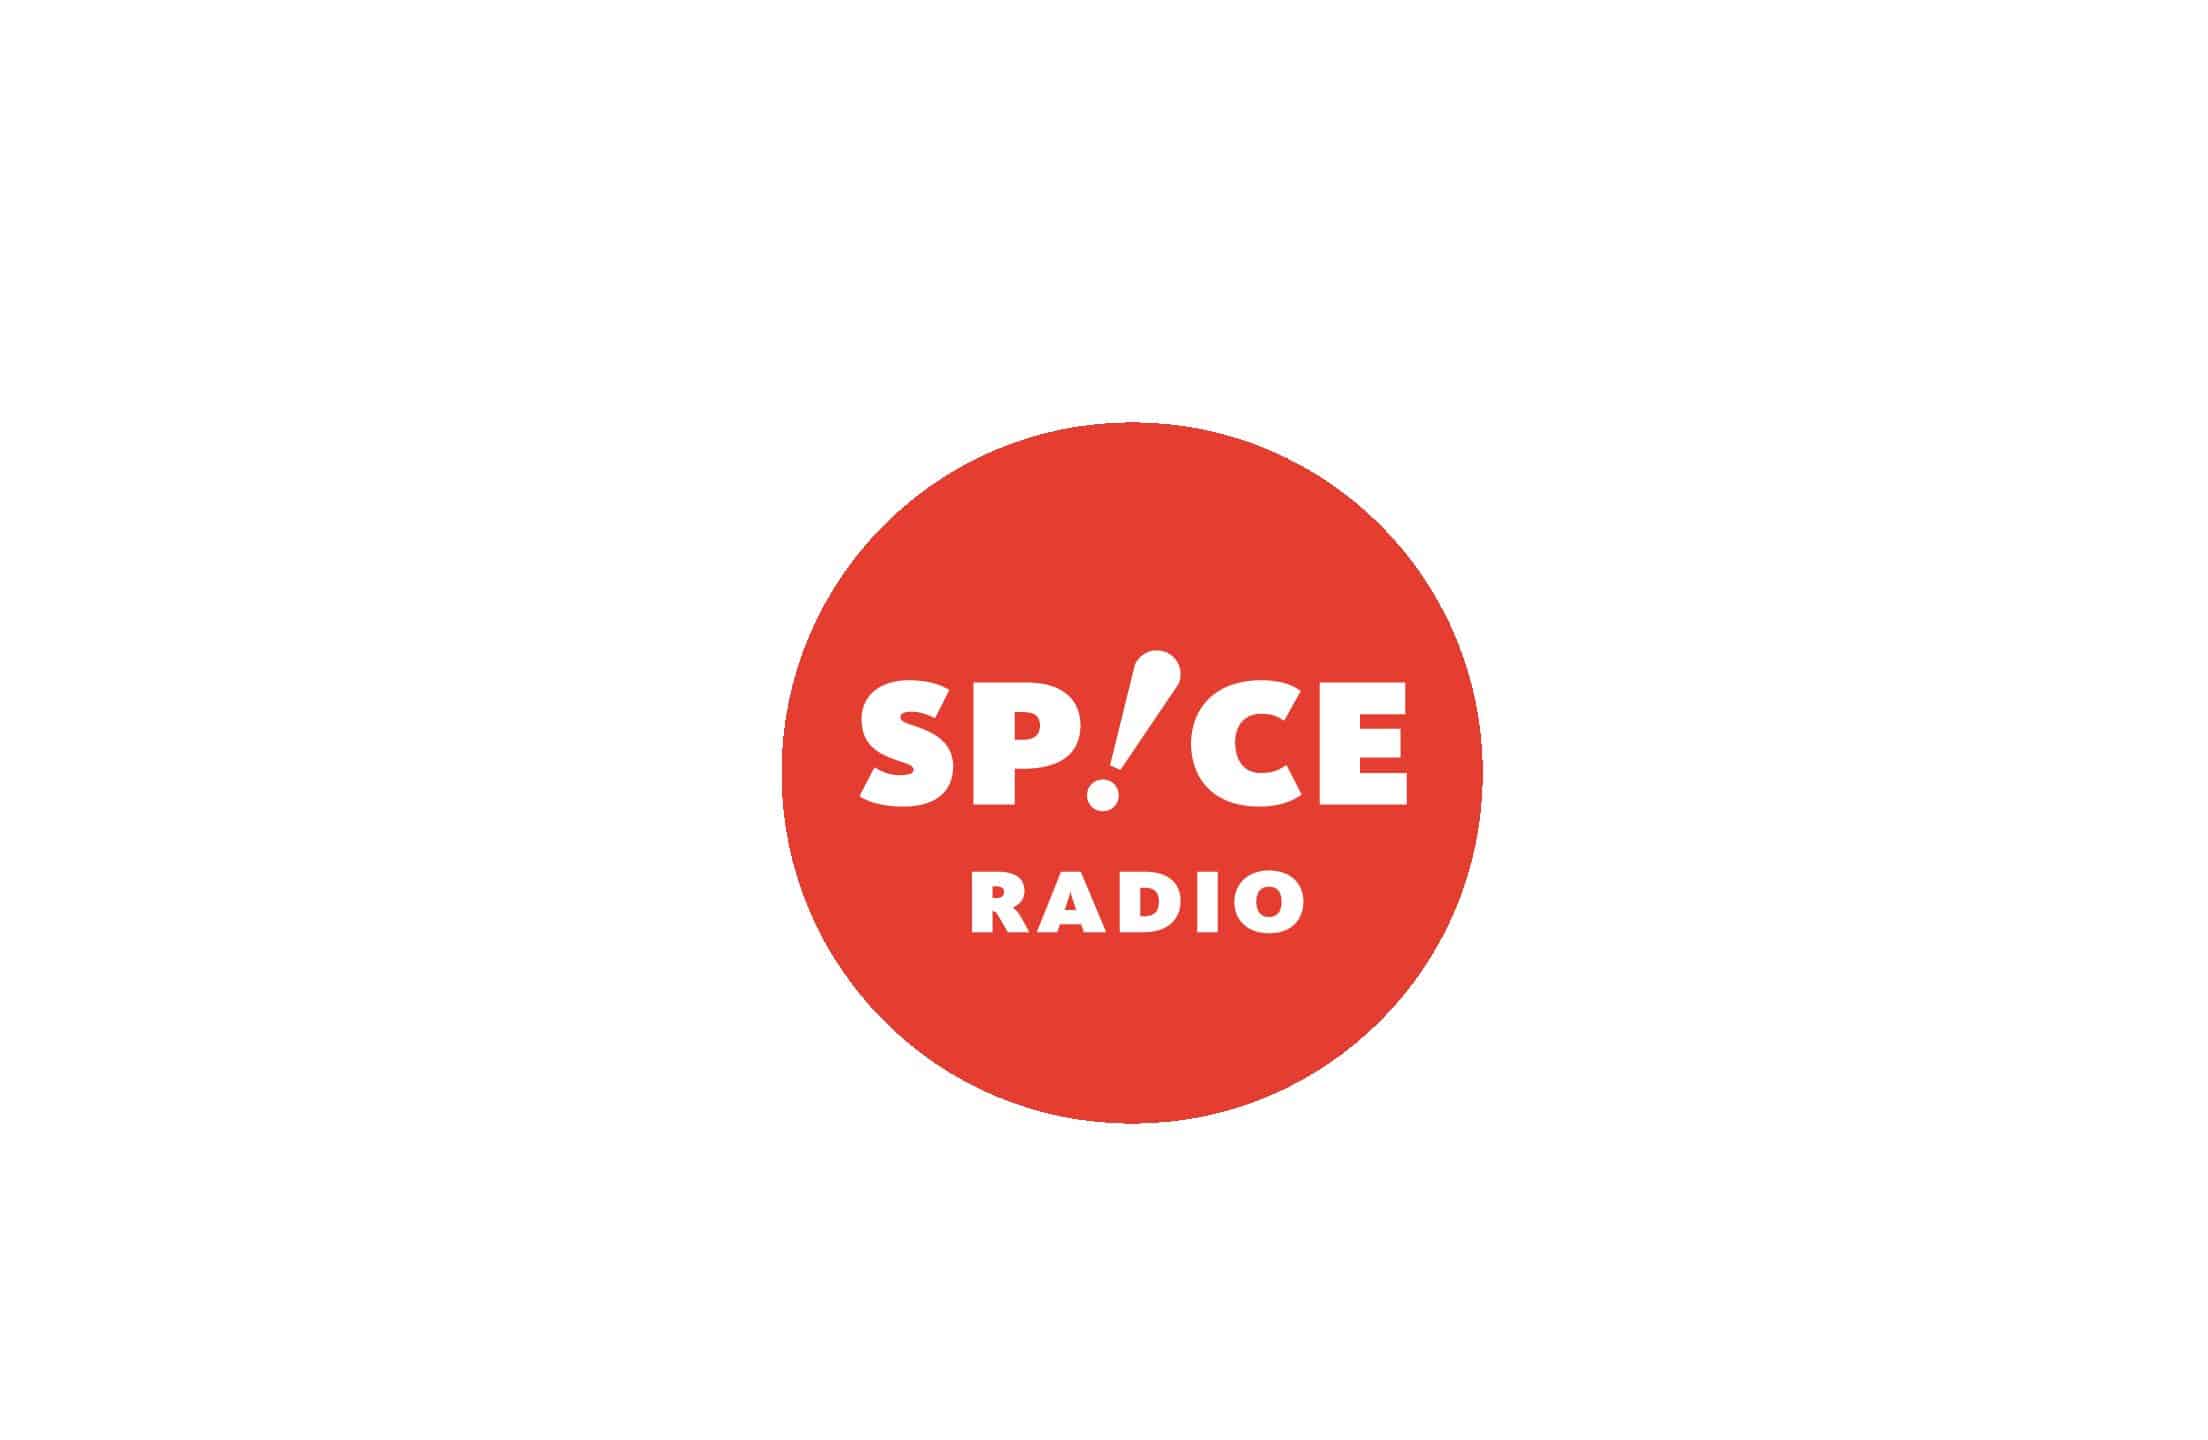 spice radio logo